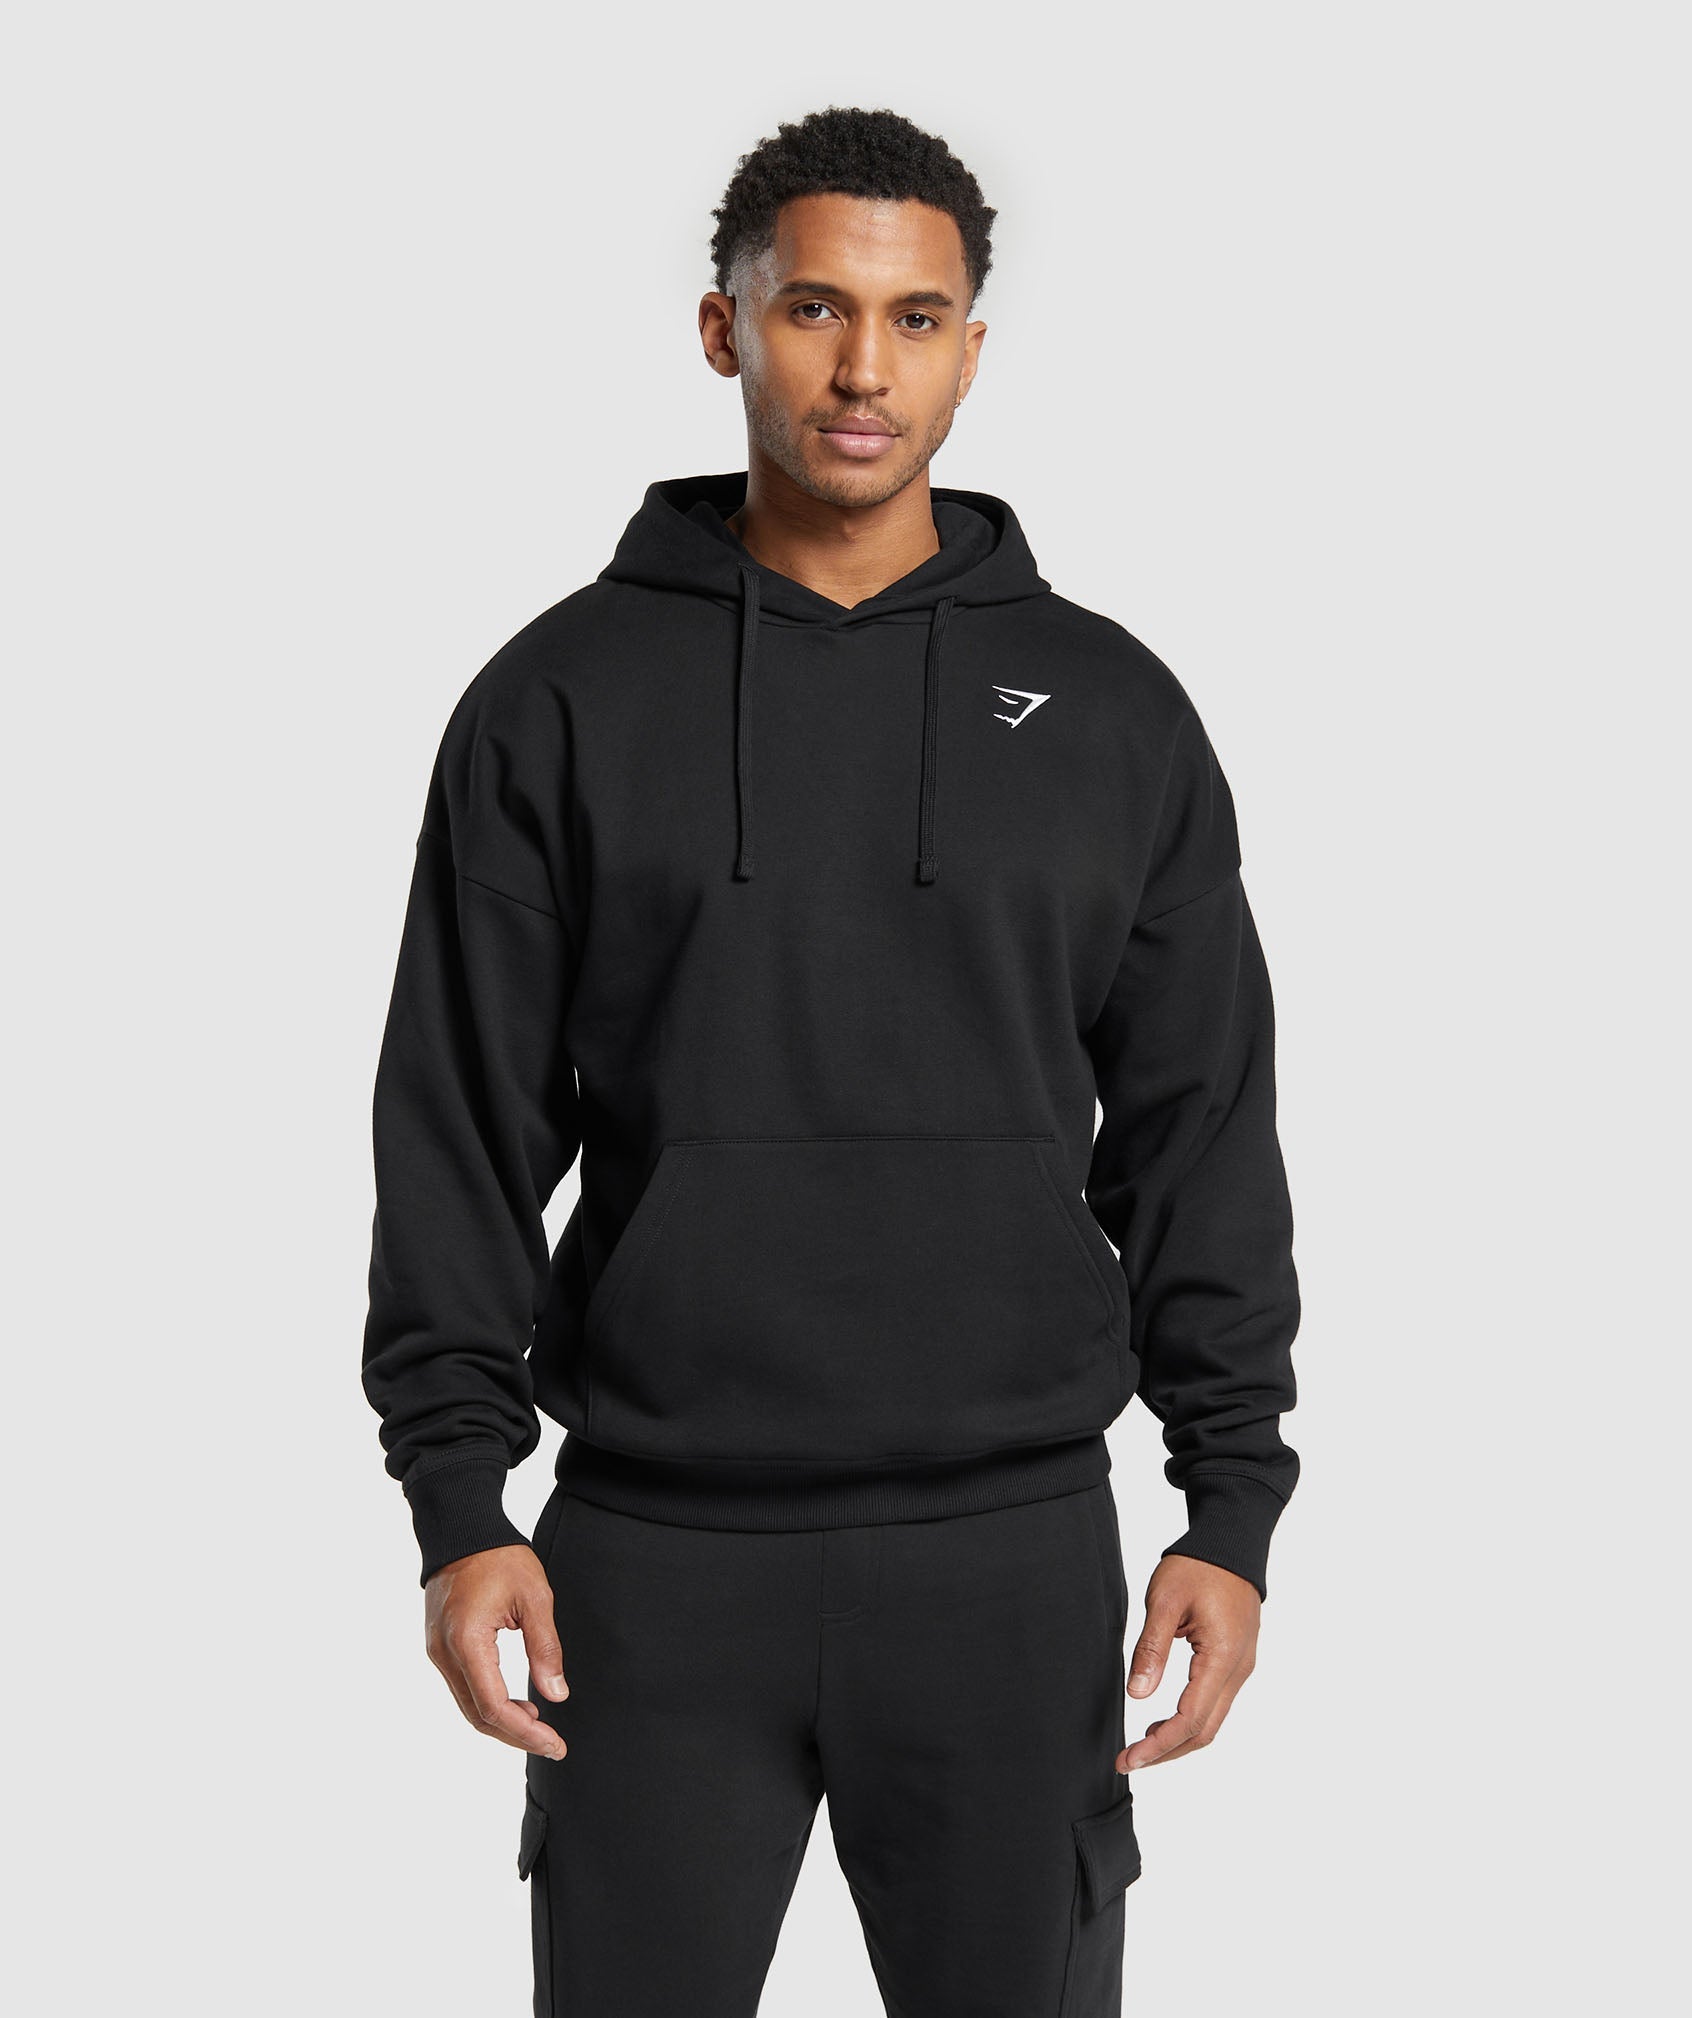 Men Sweatshirt With Hood and Zip Fleece Lined 500 For Gym-Light Grey